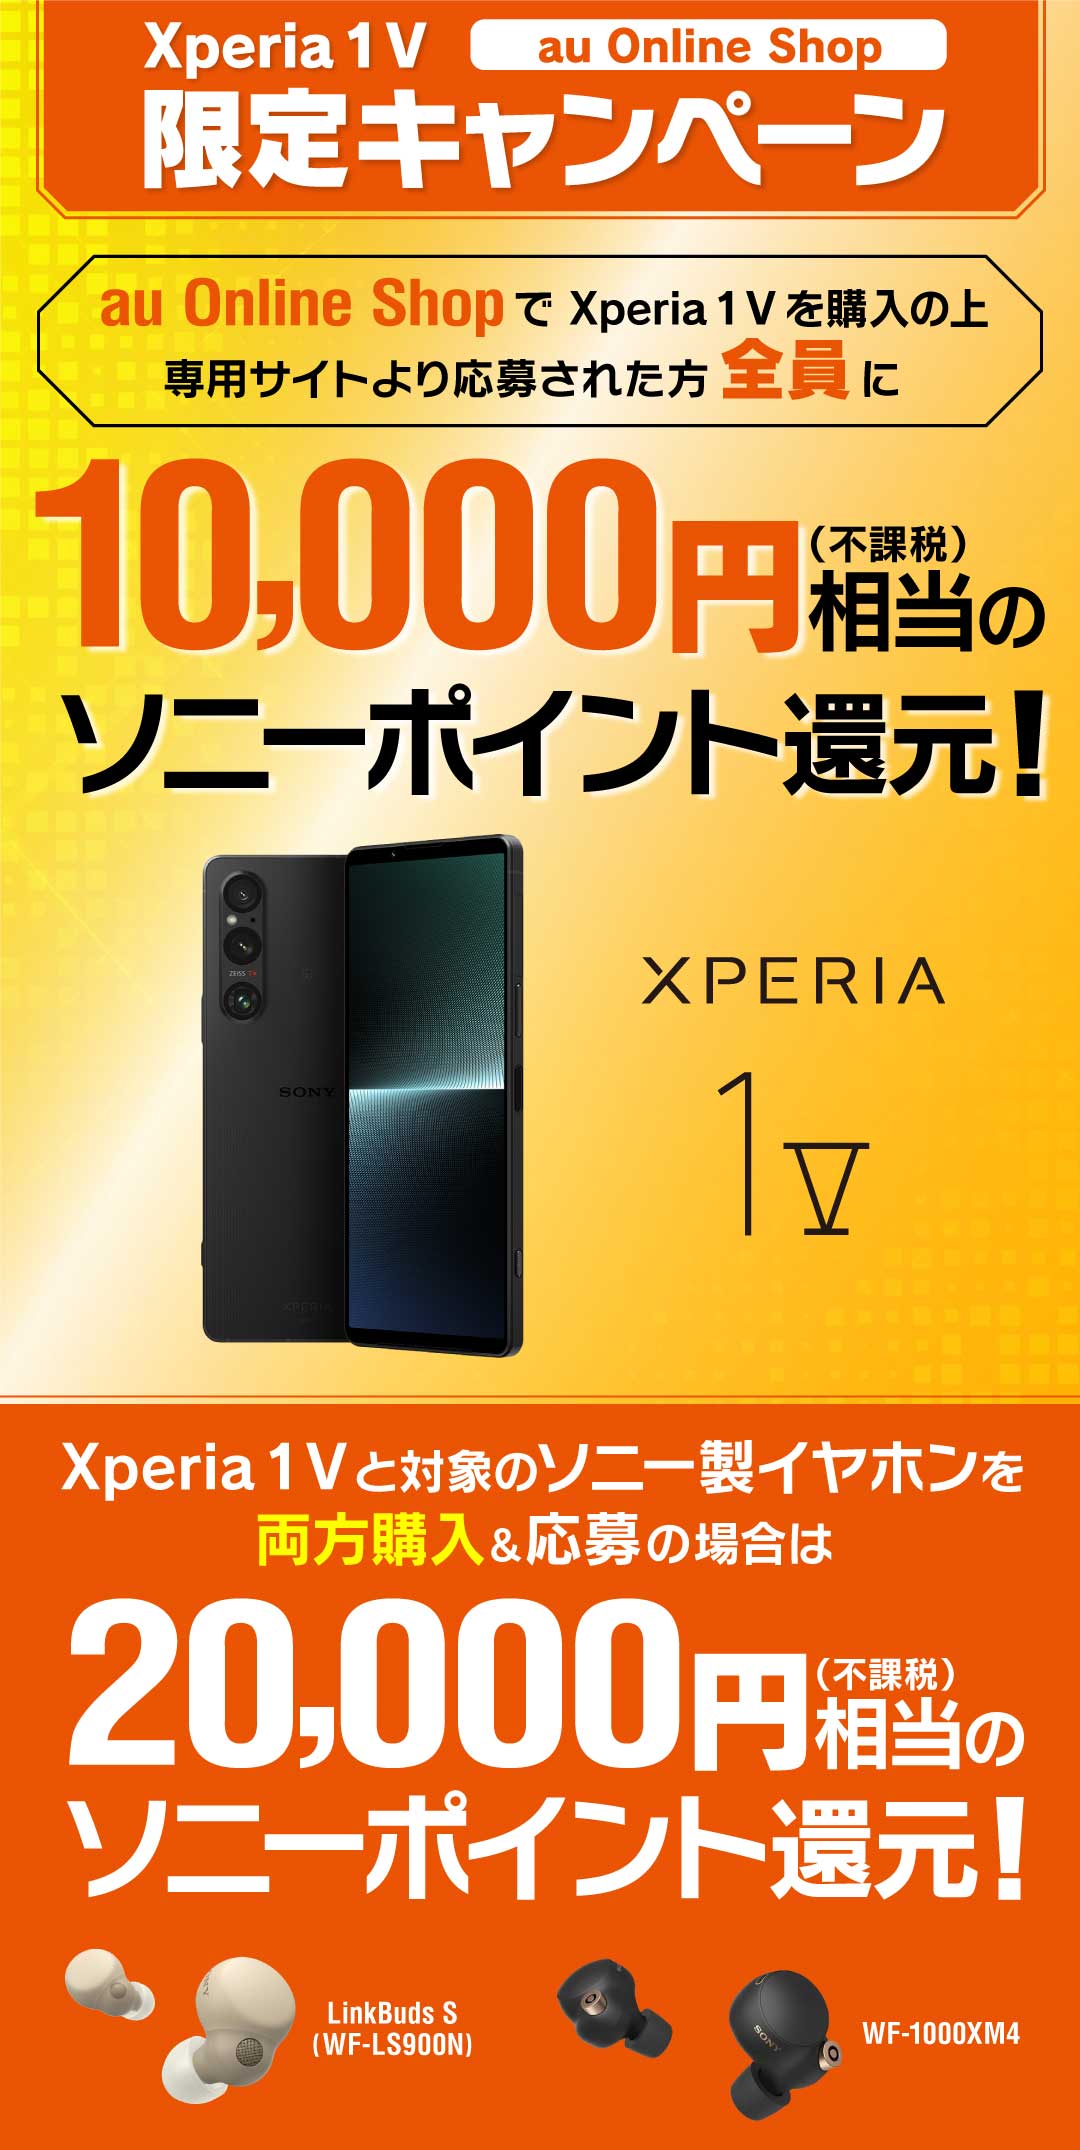 au Xperia 1 V au Online Shop 限定キャンペーン 応募規約 | Xperia